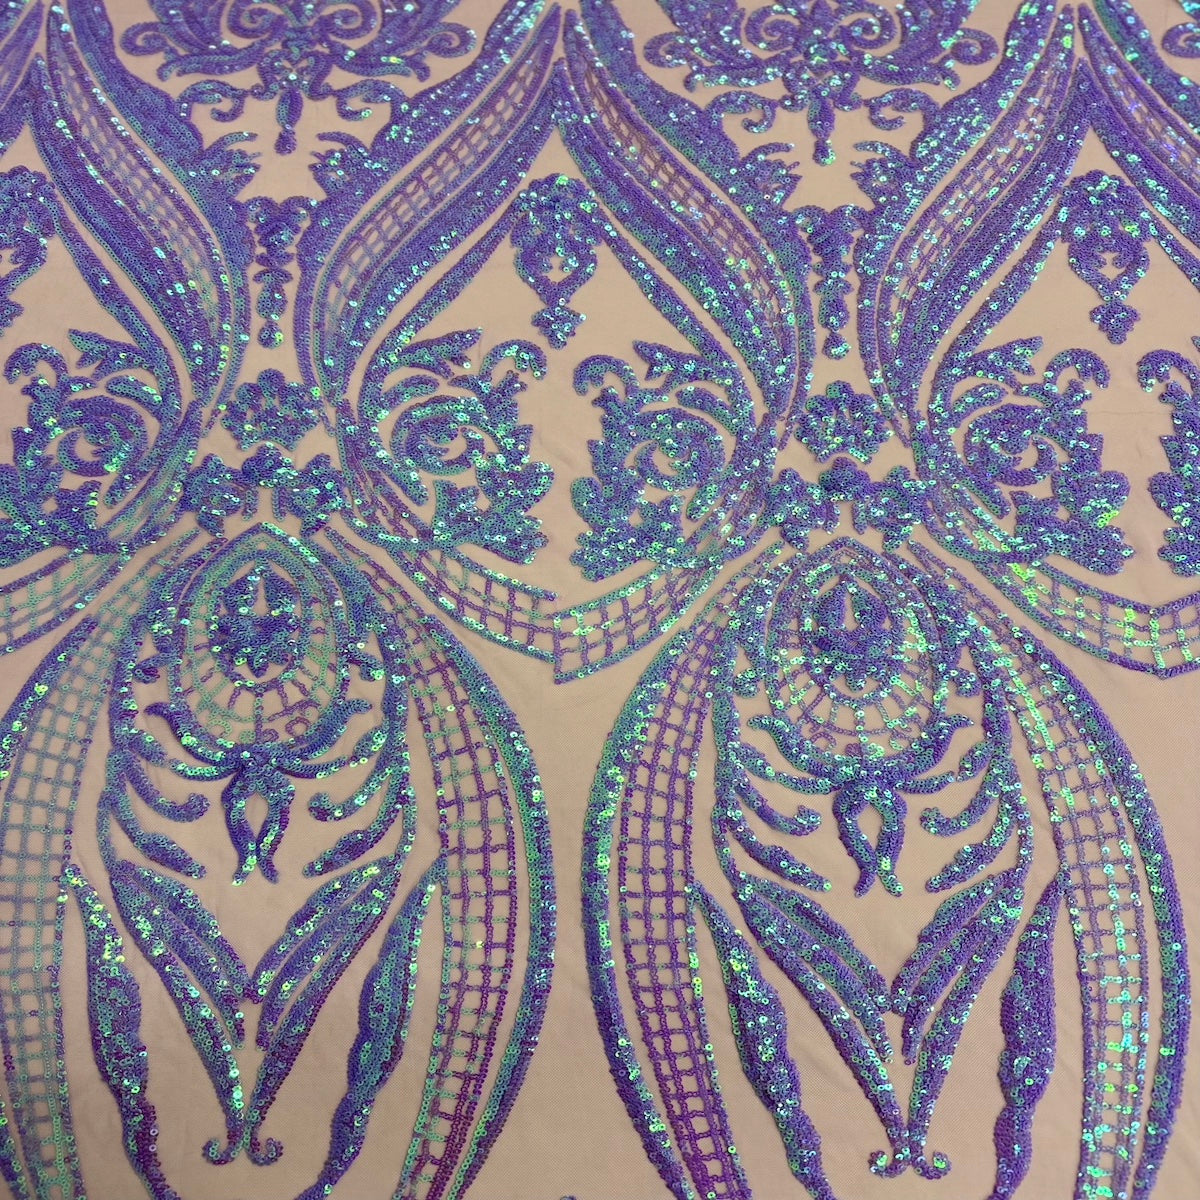 Lavender Iridescent Catina Sequins Lace Fabric